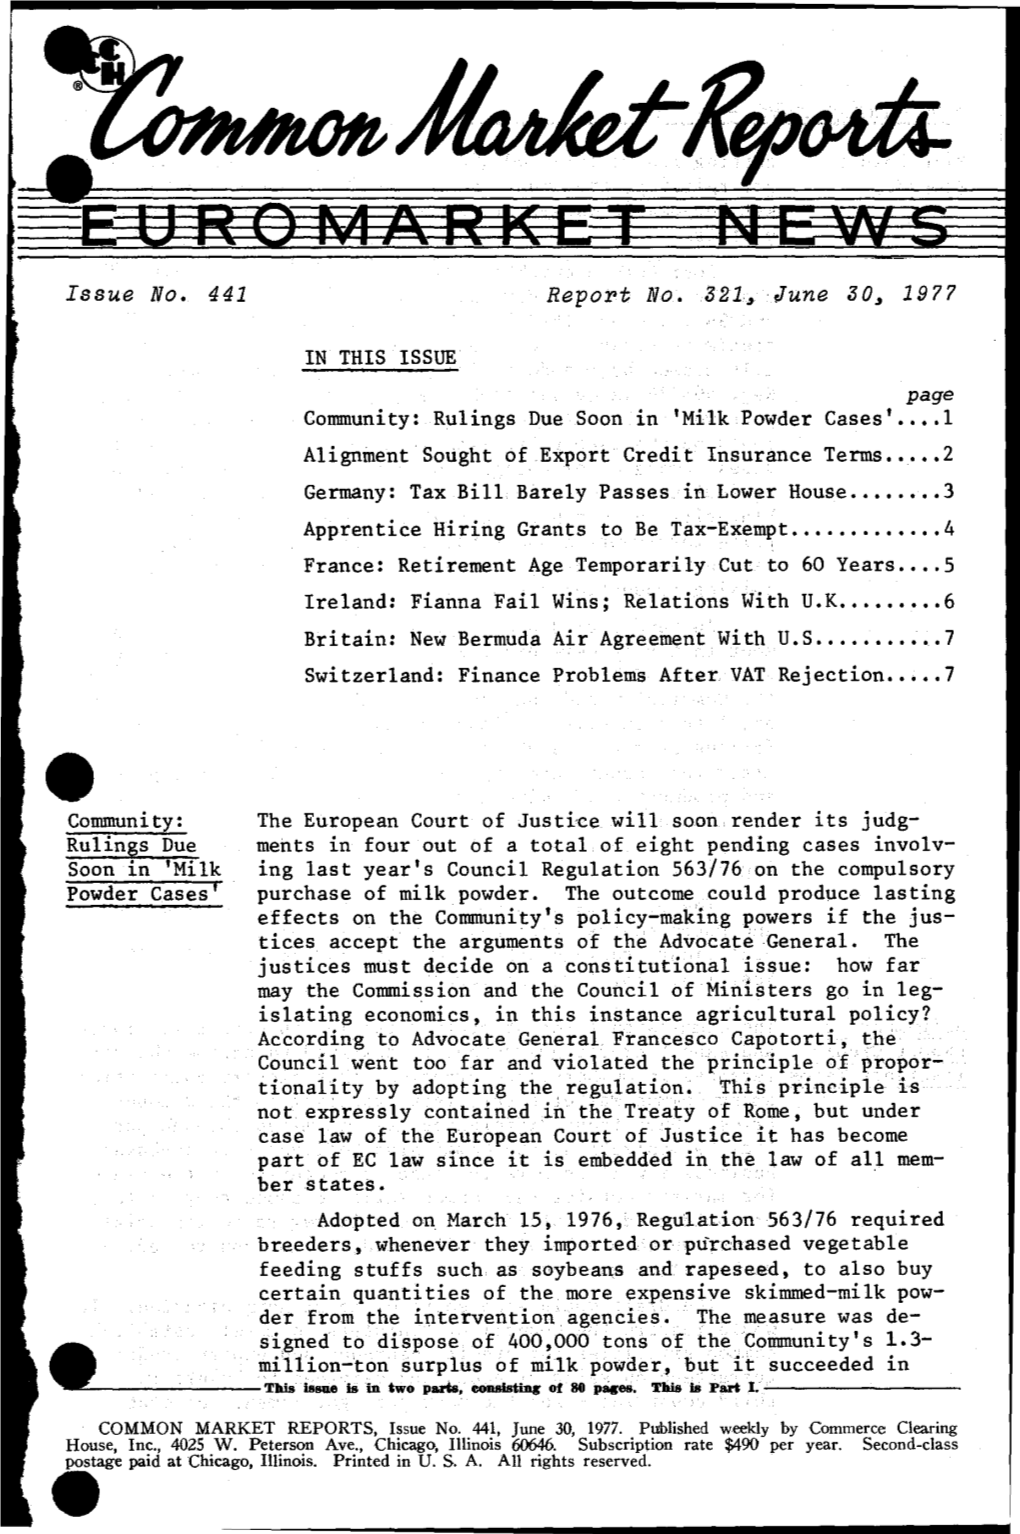 Issue No. 441 Report No. 321, June 30, 1977